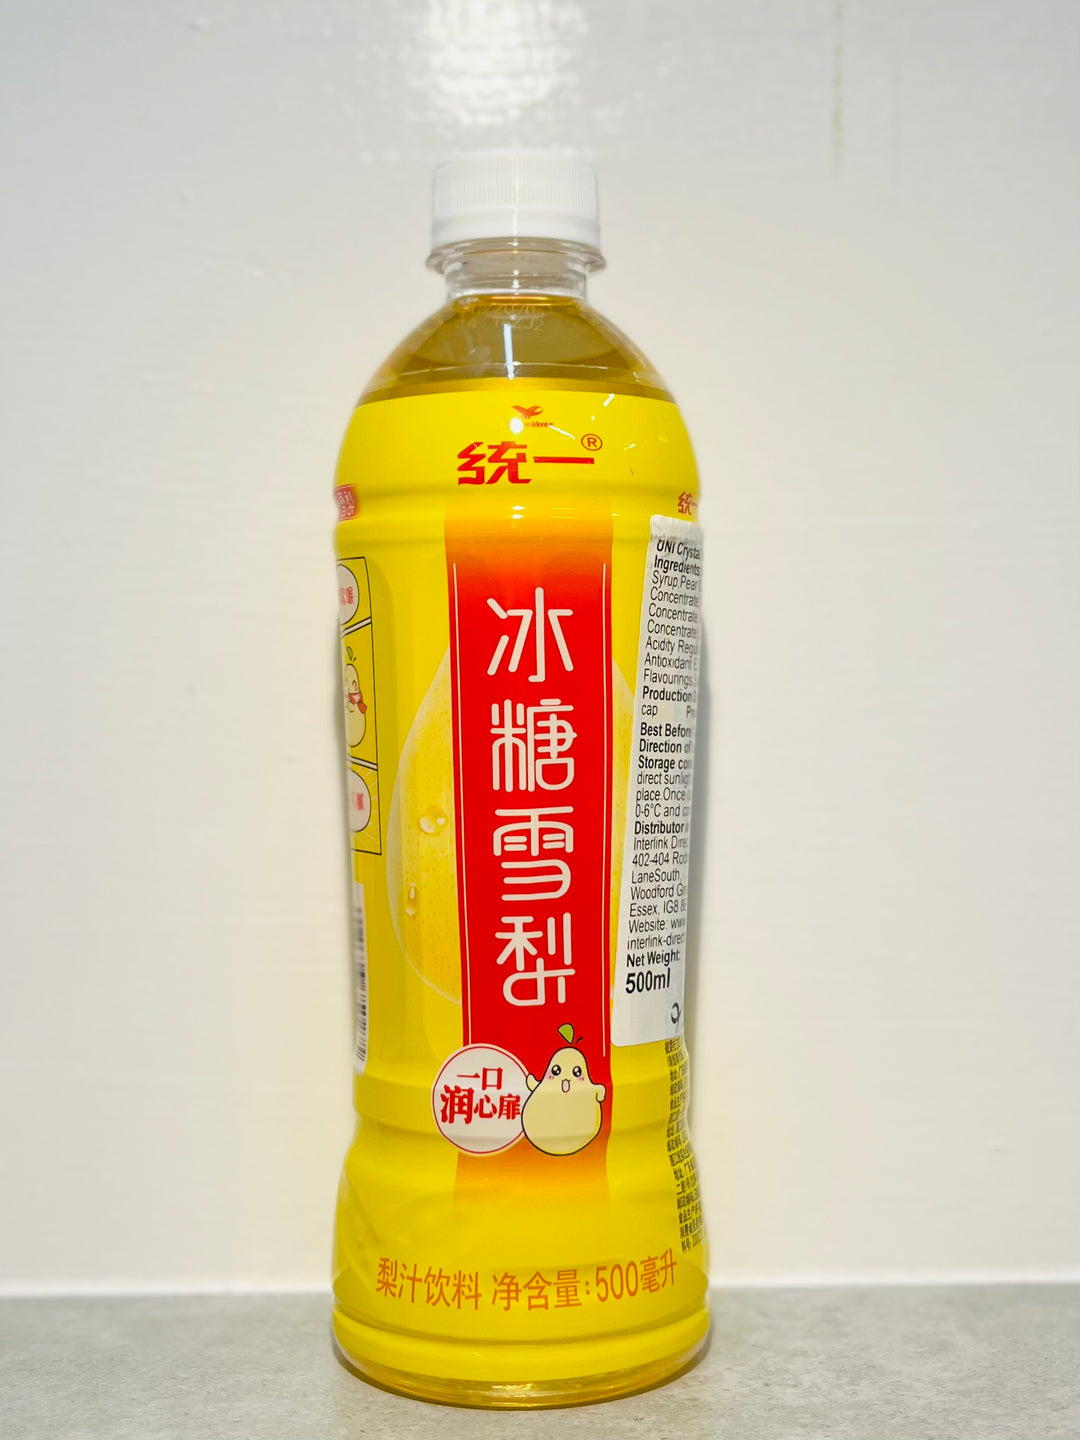 统一冰糖雪梨500ml Uni Crystal Sugar drink